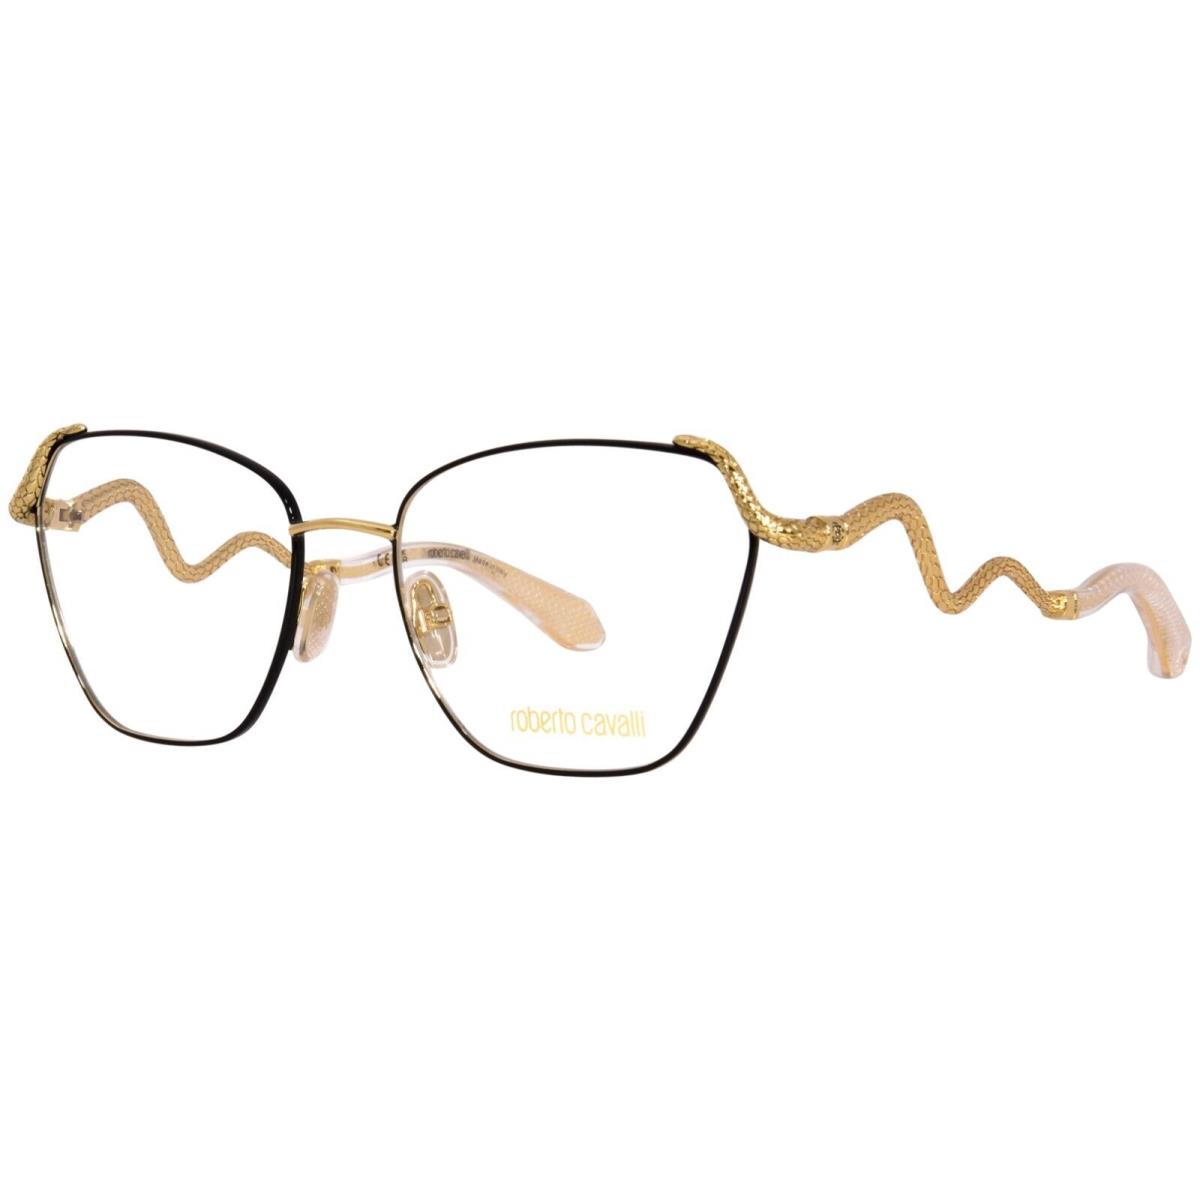 Roberto Cavalli Eyeglasses VRC021 0A01 Black Gold Full Rim Frames 54MM Rx-able